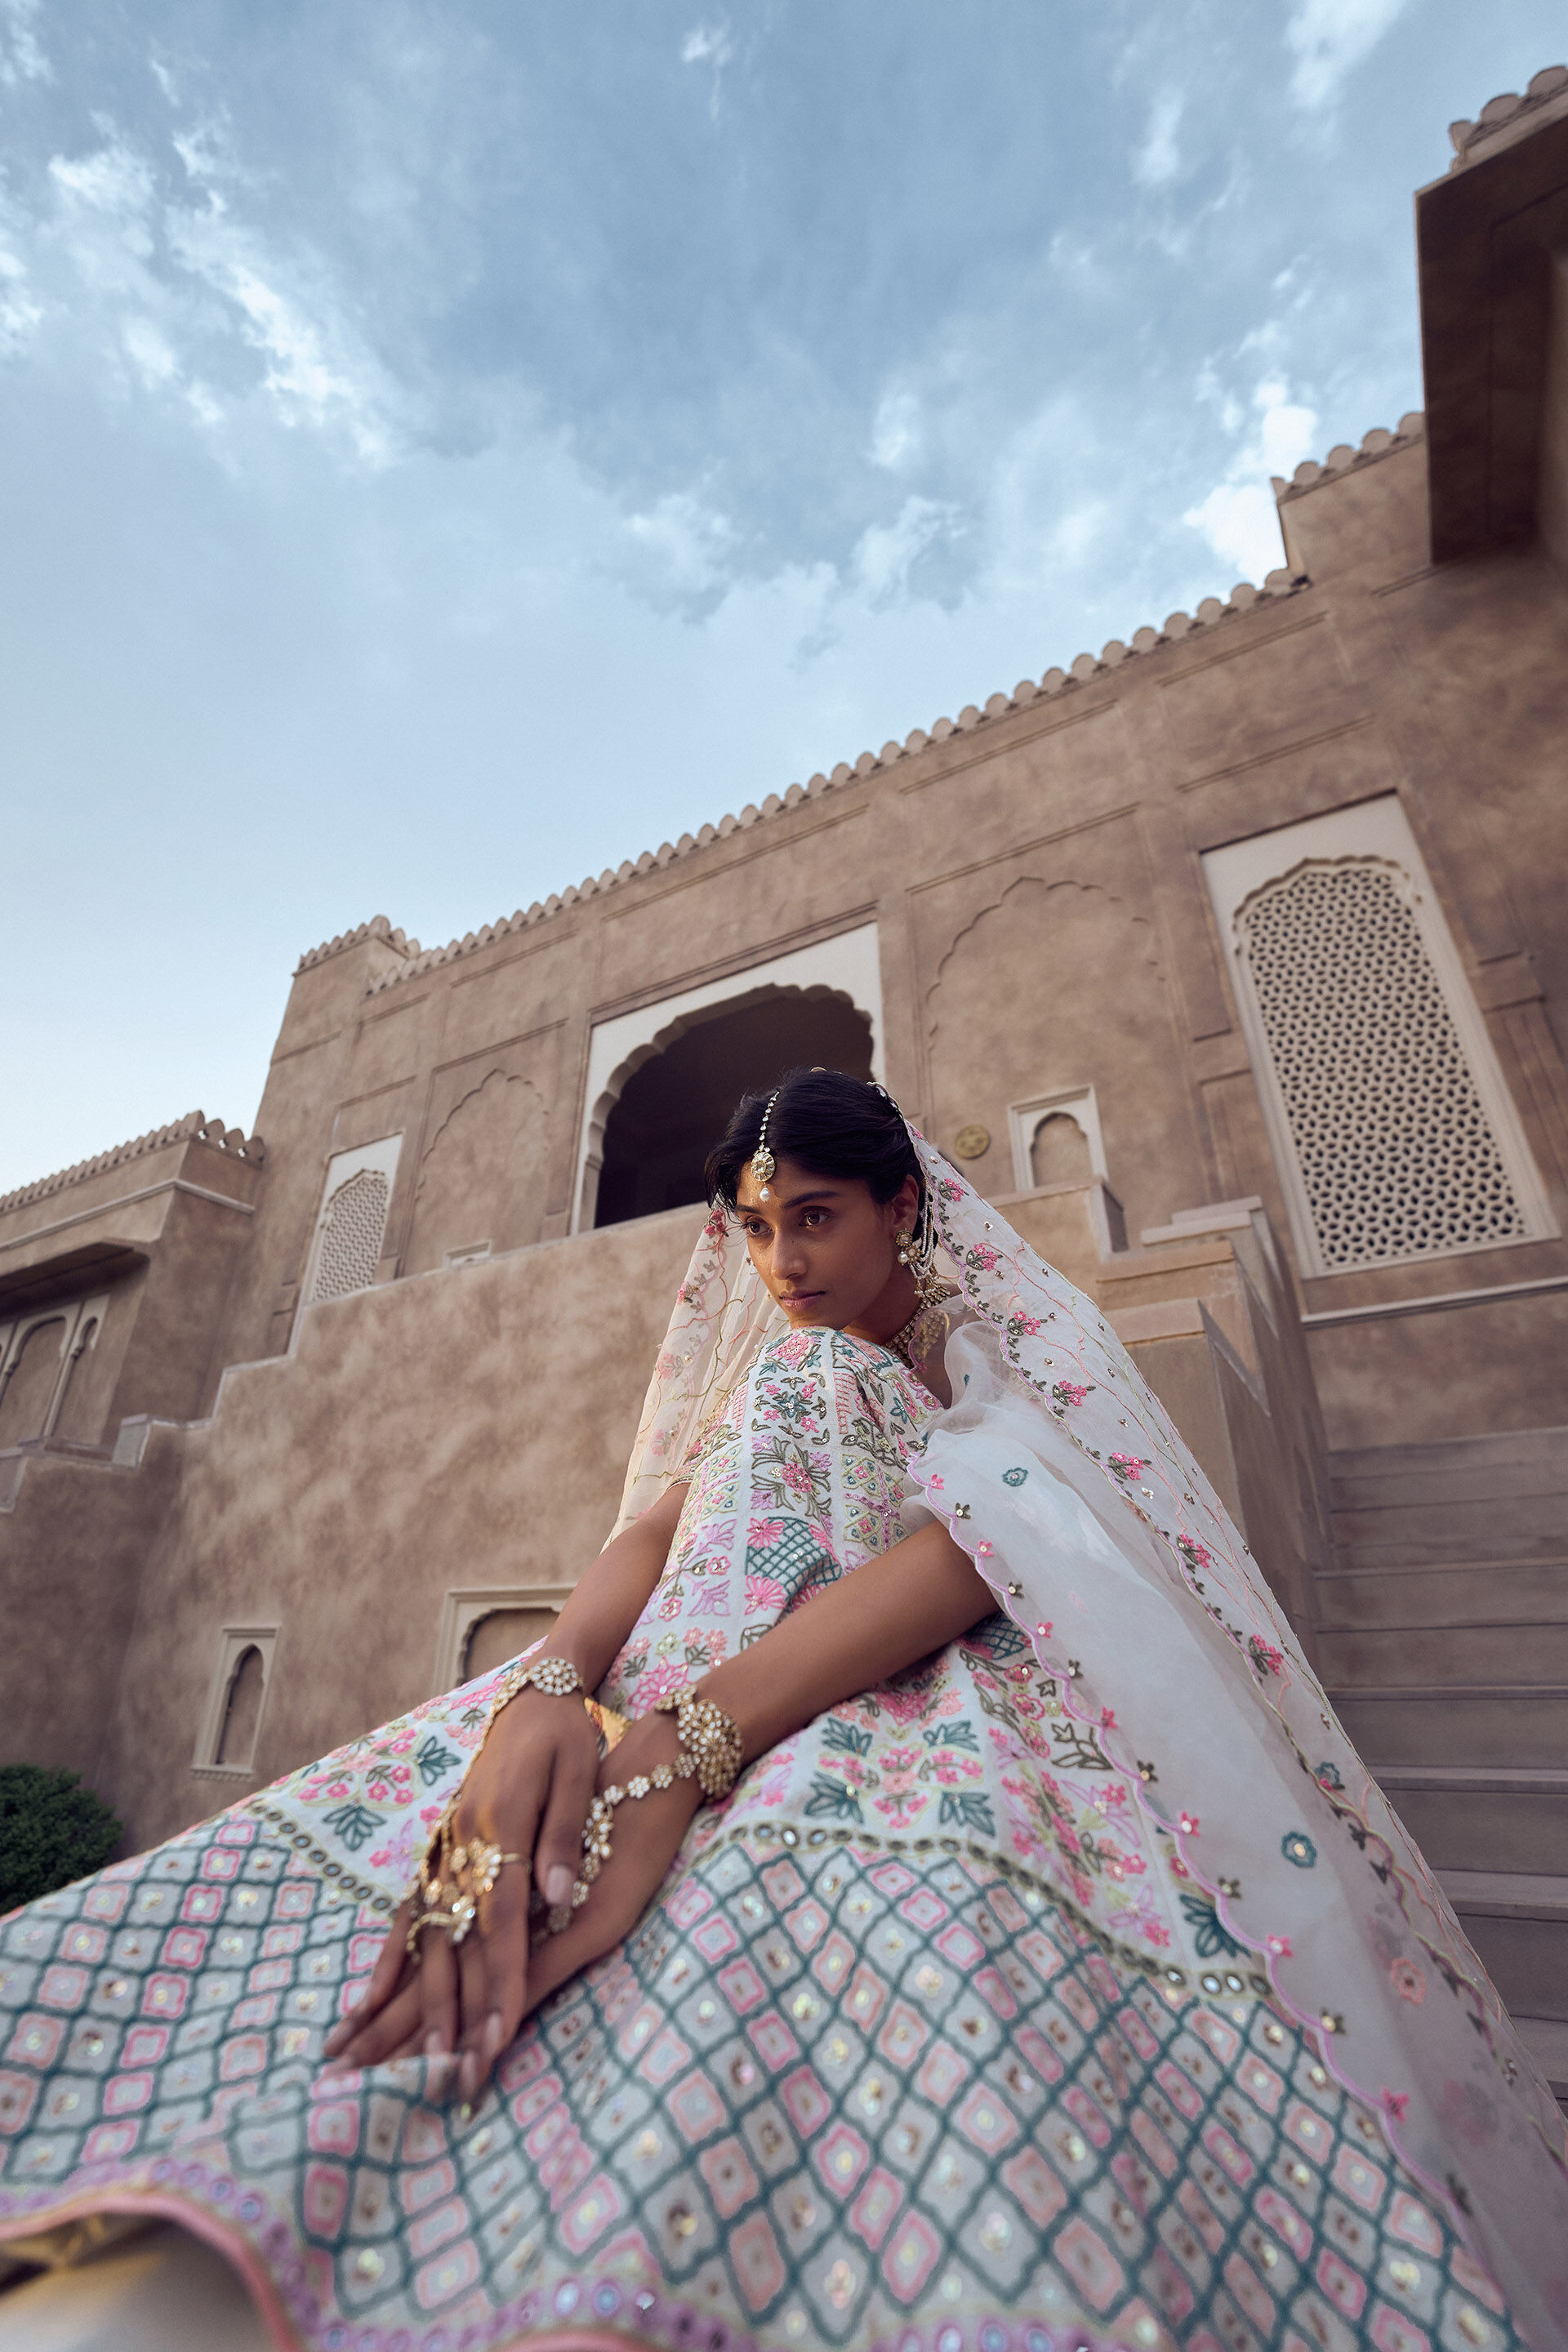 Kiara Advani chose a soft rose lehenga for her wedding ensemble | Vogue  India